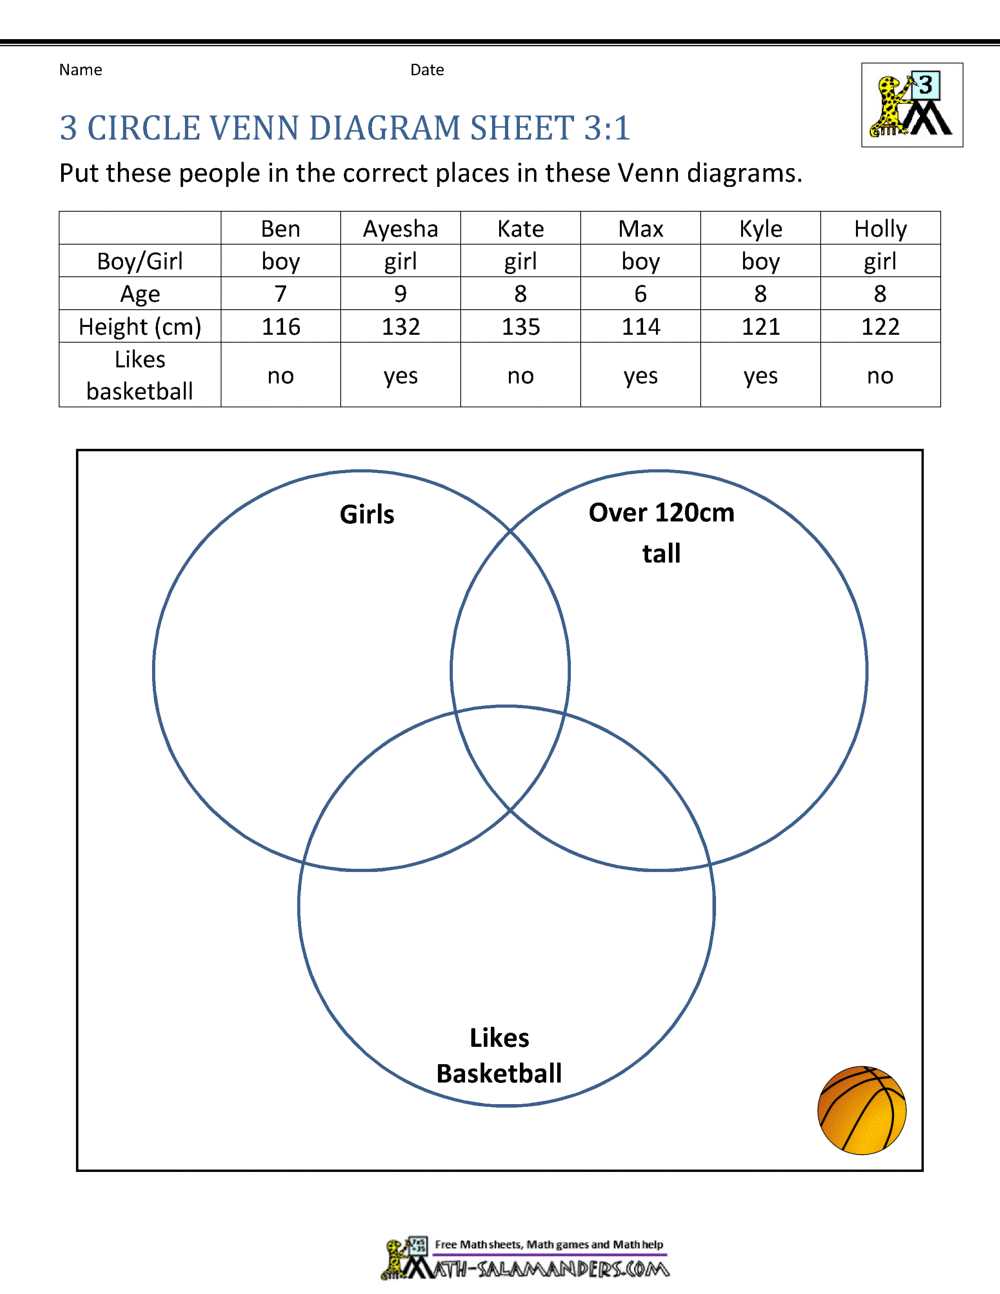 2. Three-Set Venn Diagram: